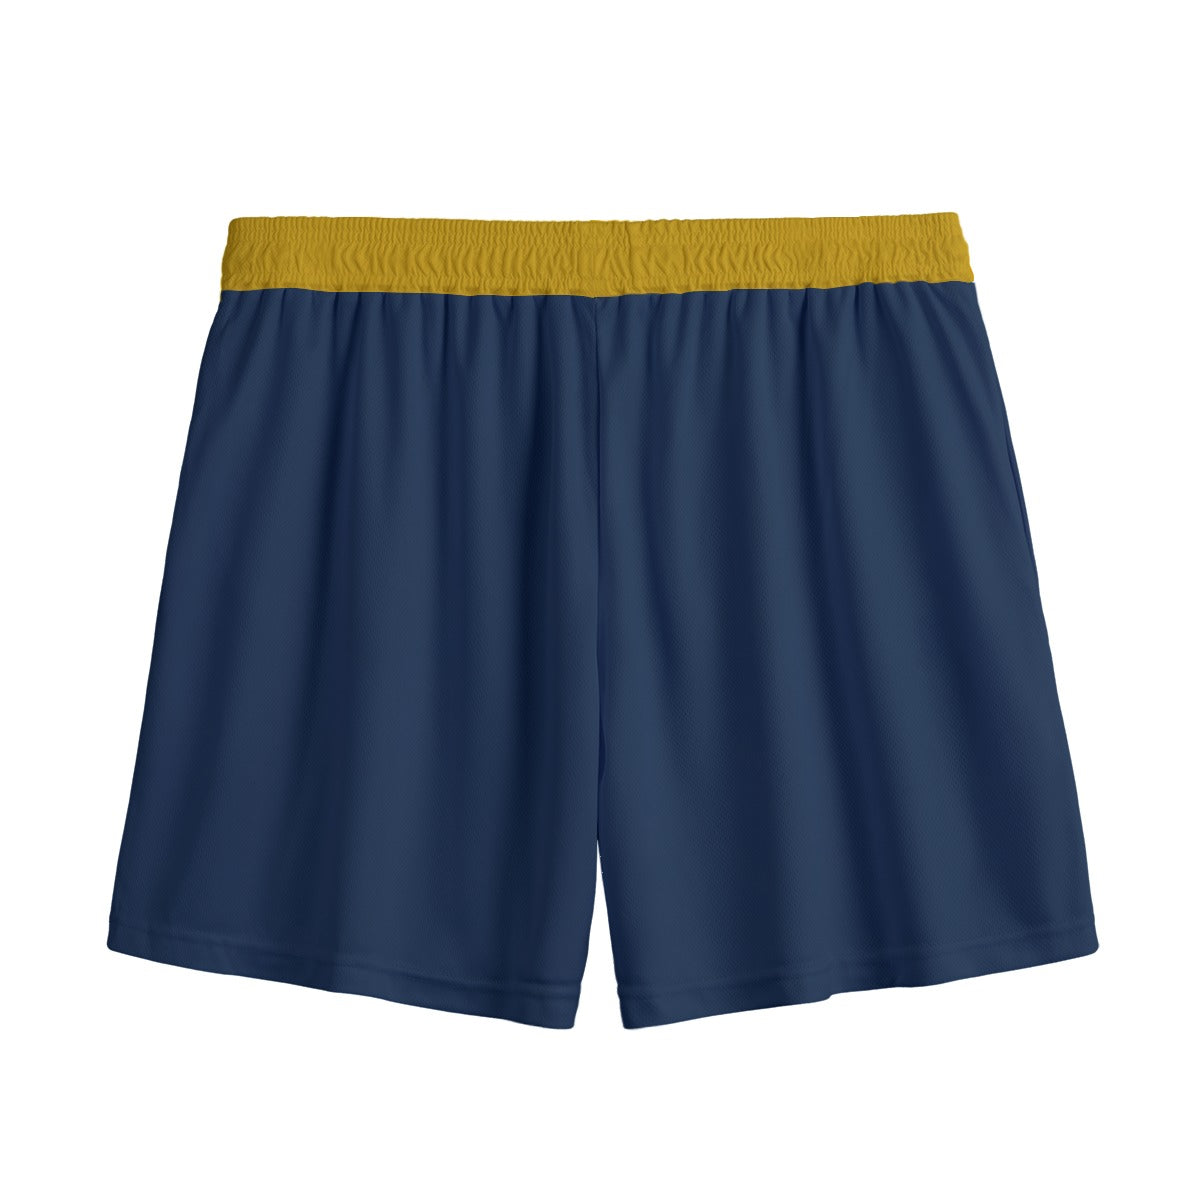 Notre Dame Mesh Shorts